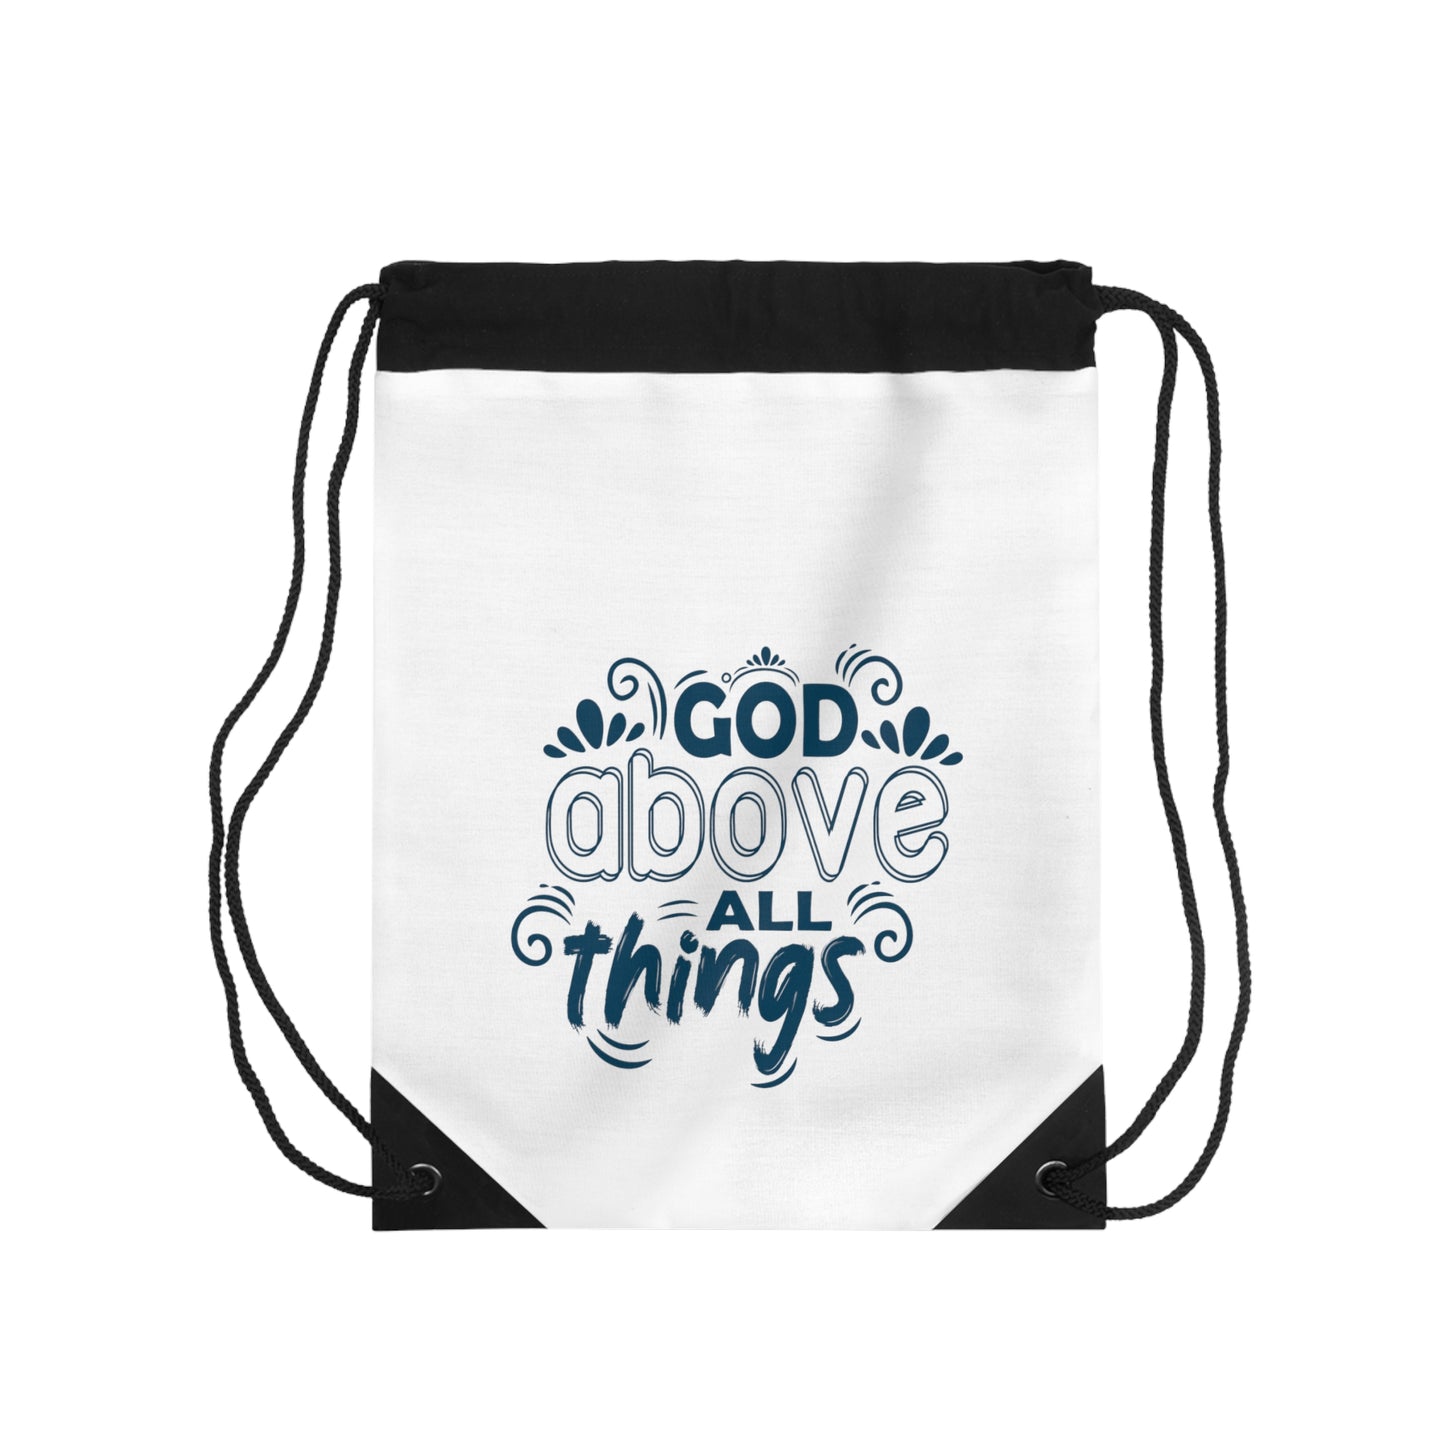 God Above All Things Drawstring Bag